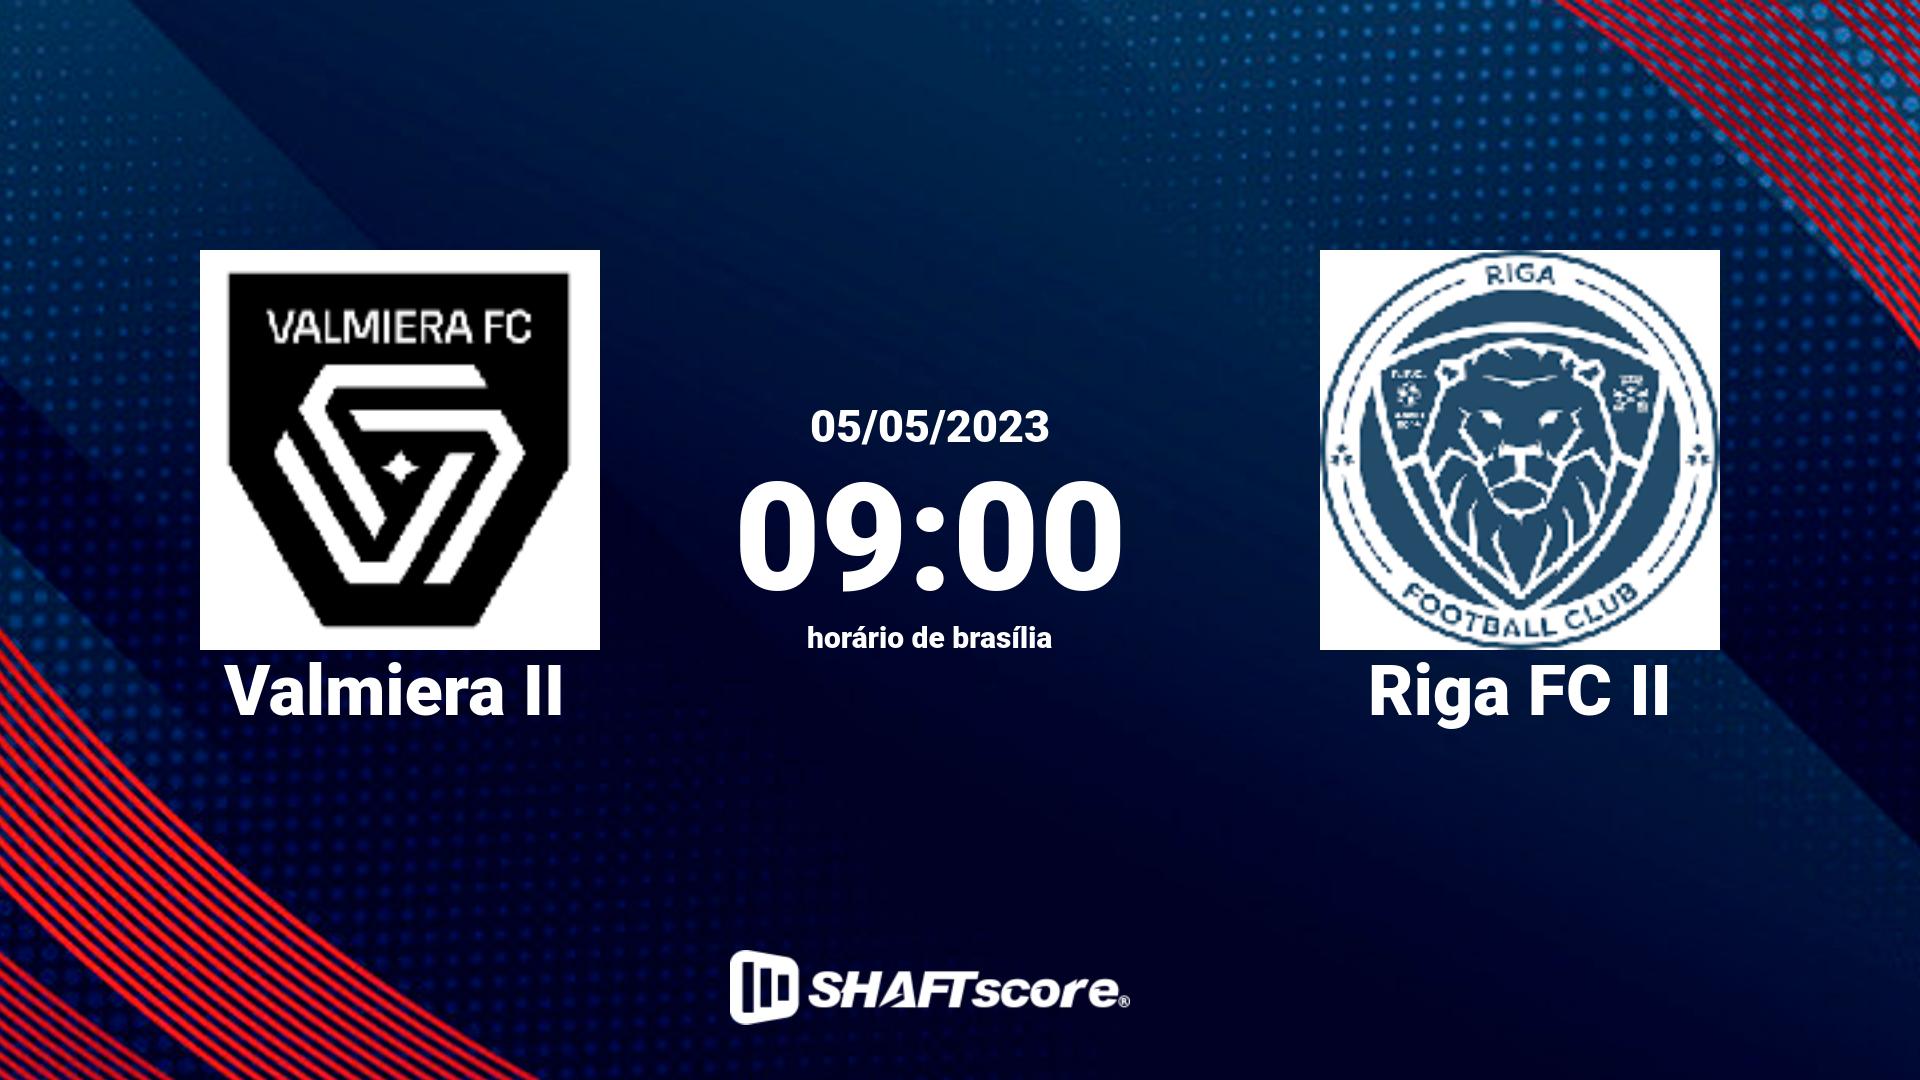 Estatísticas do jogo Valmiera II vs Riga FC II 05.05 09:00